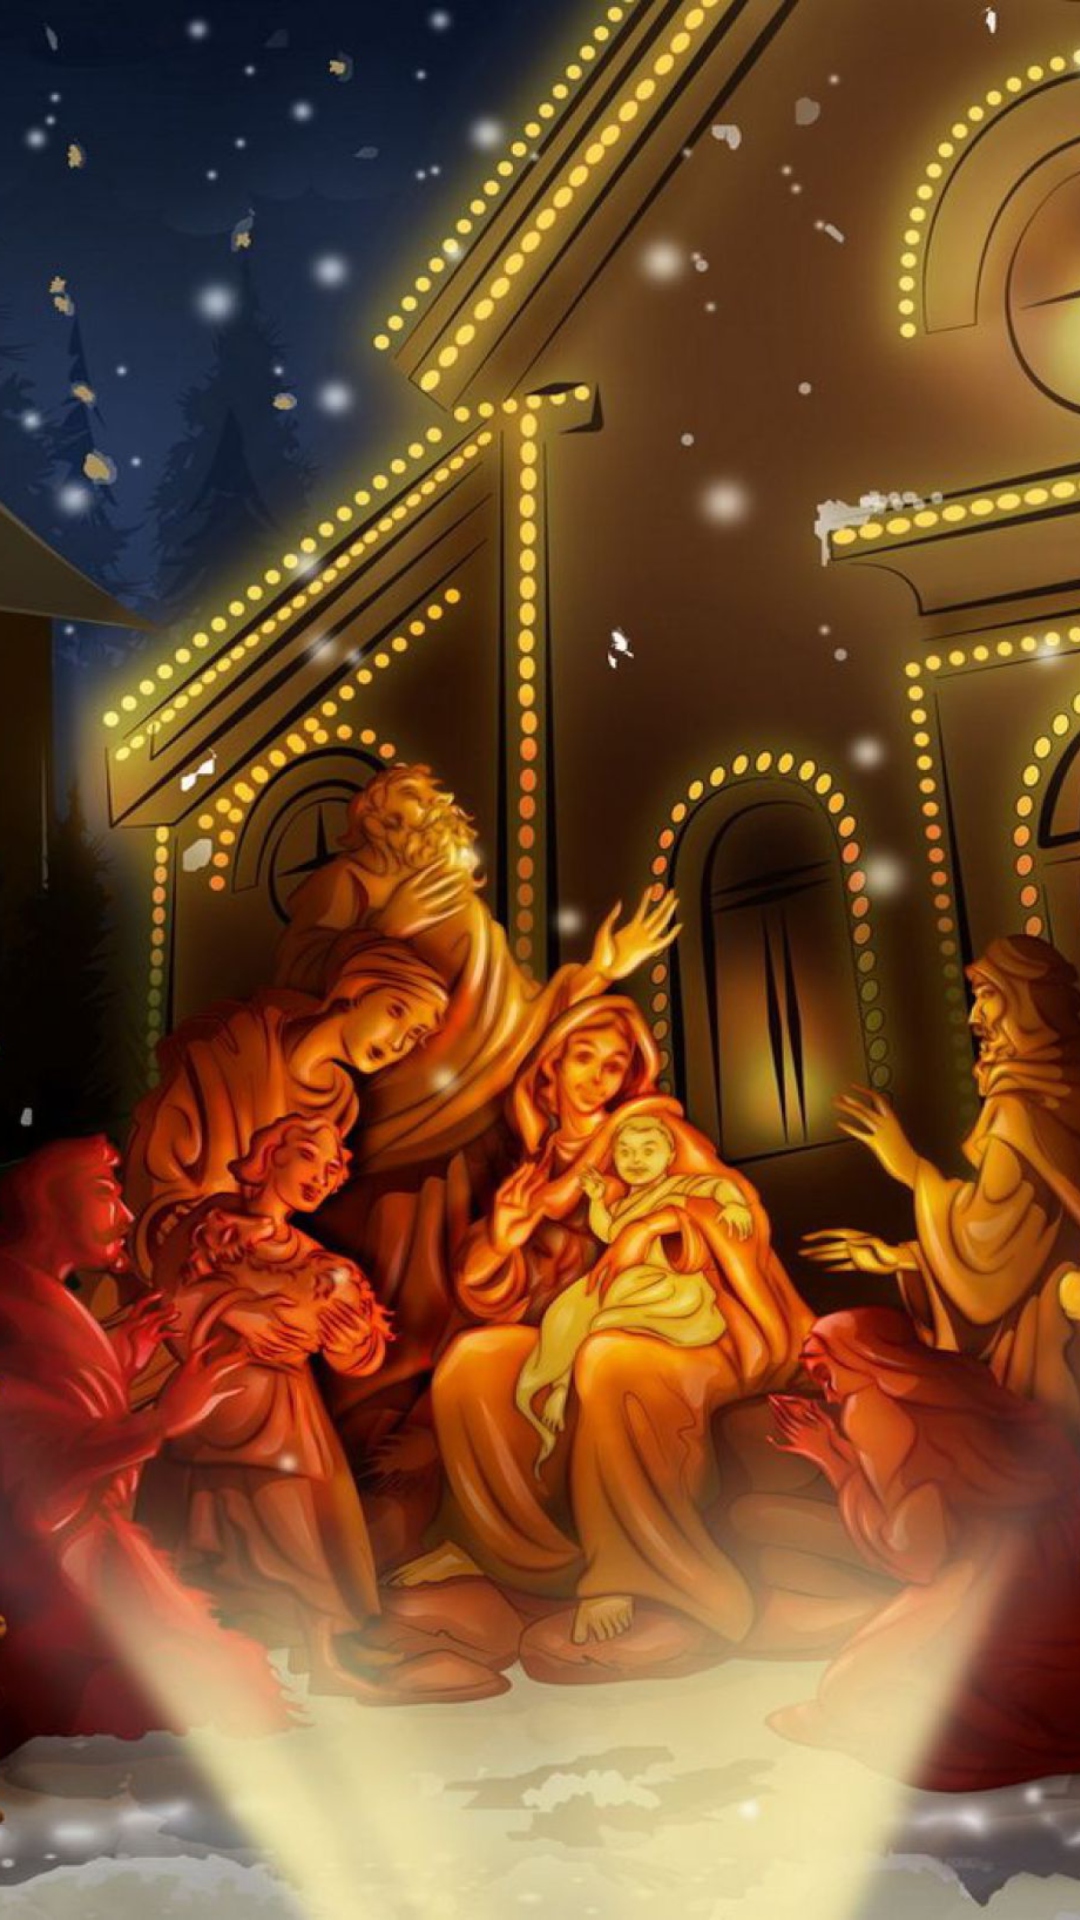 Das Jesus Born Wallpaper 1080x1920